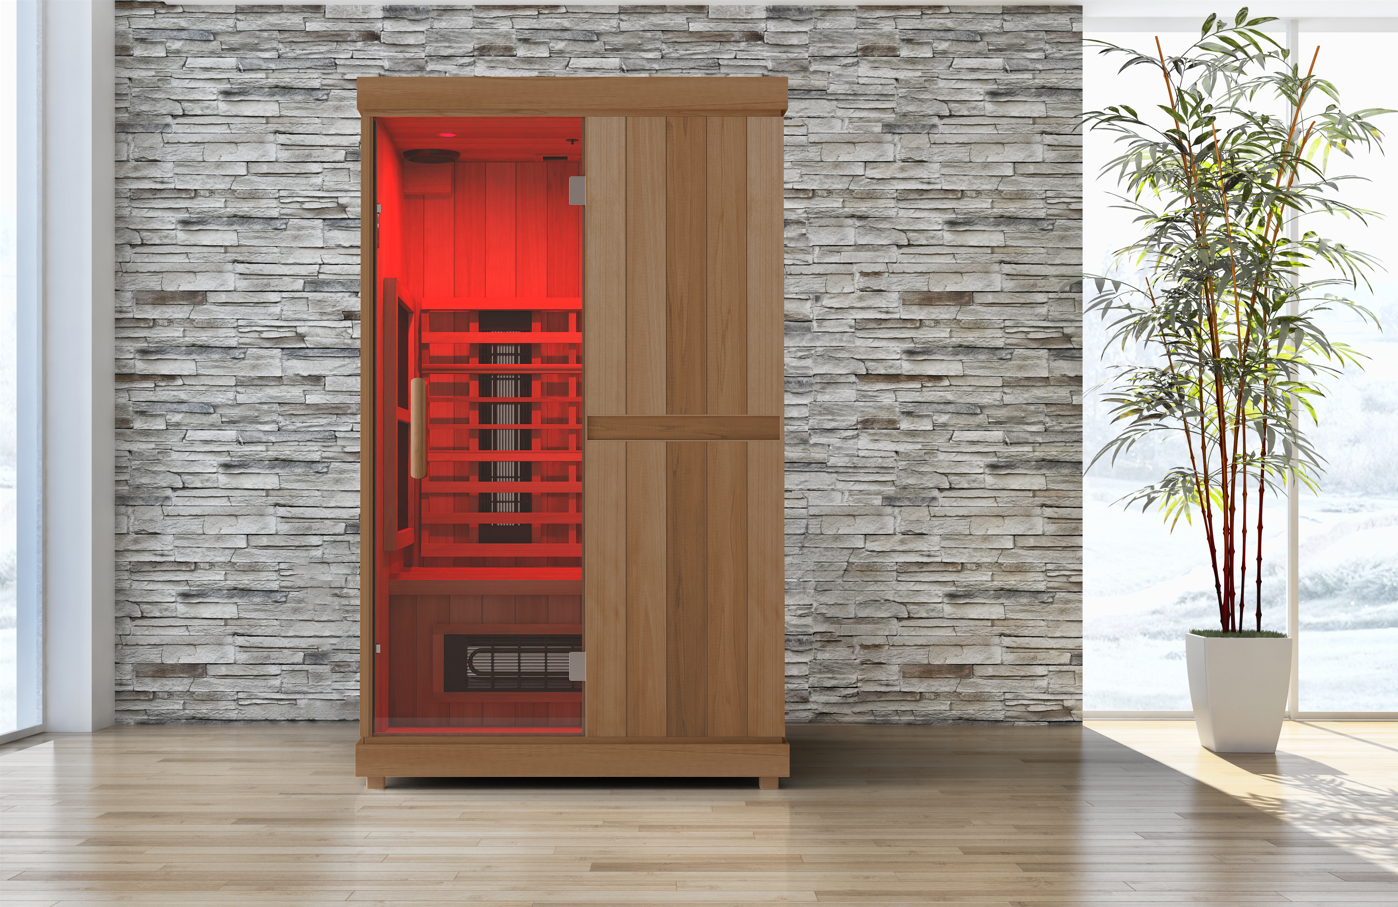 Finnmark Designs 2-Person Full Spectrum Infrared Sauna | FD-2